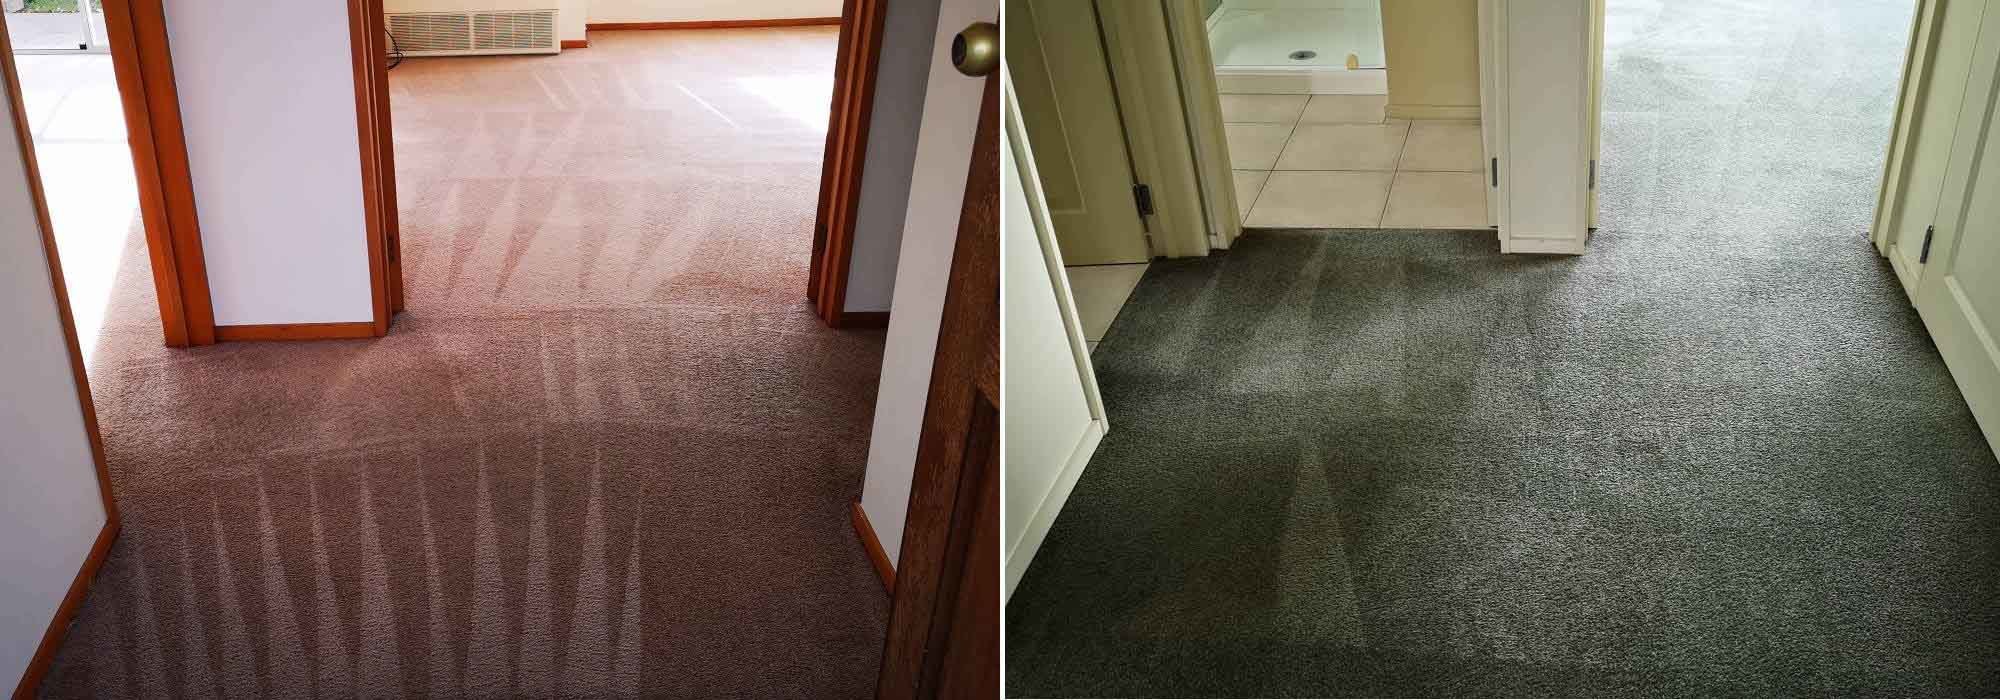 Clean Carpet by Quality Clean